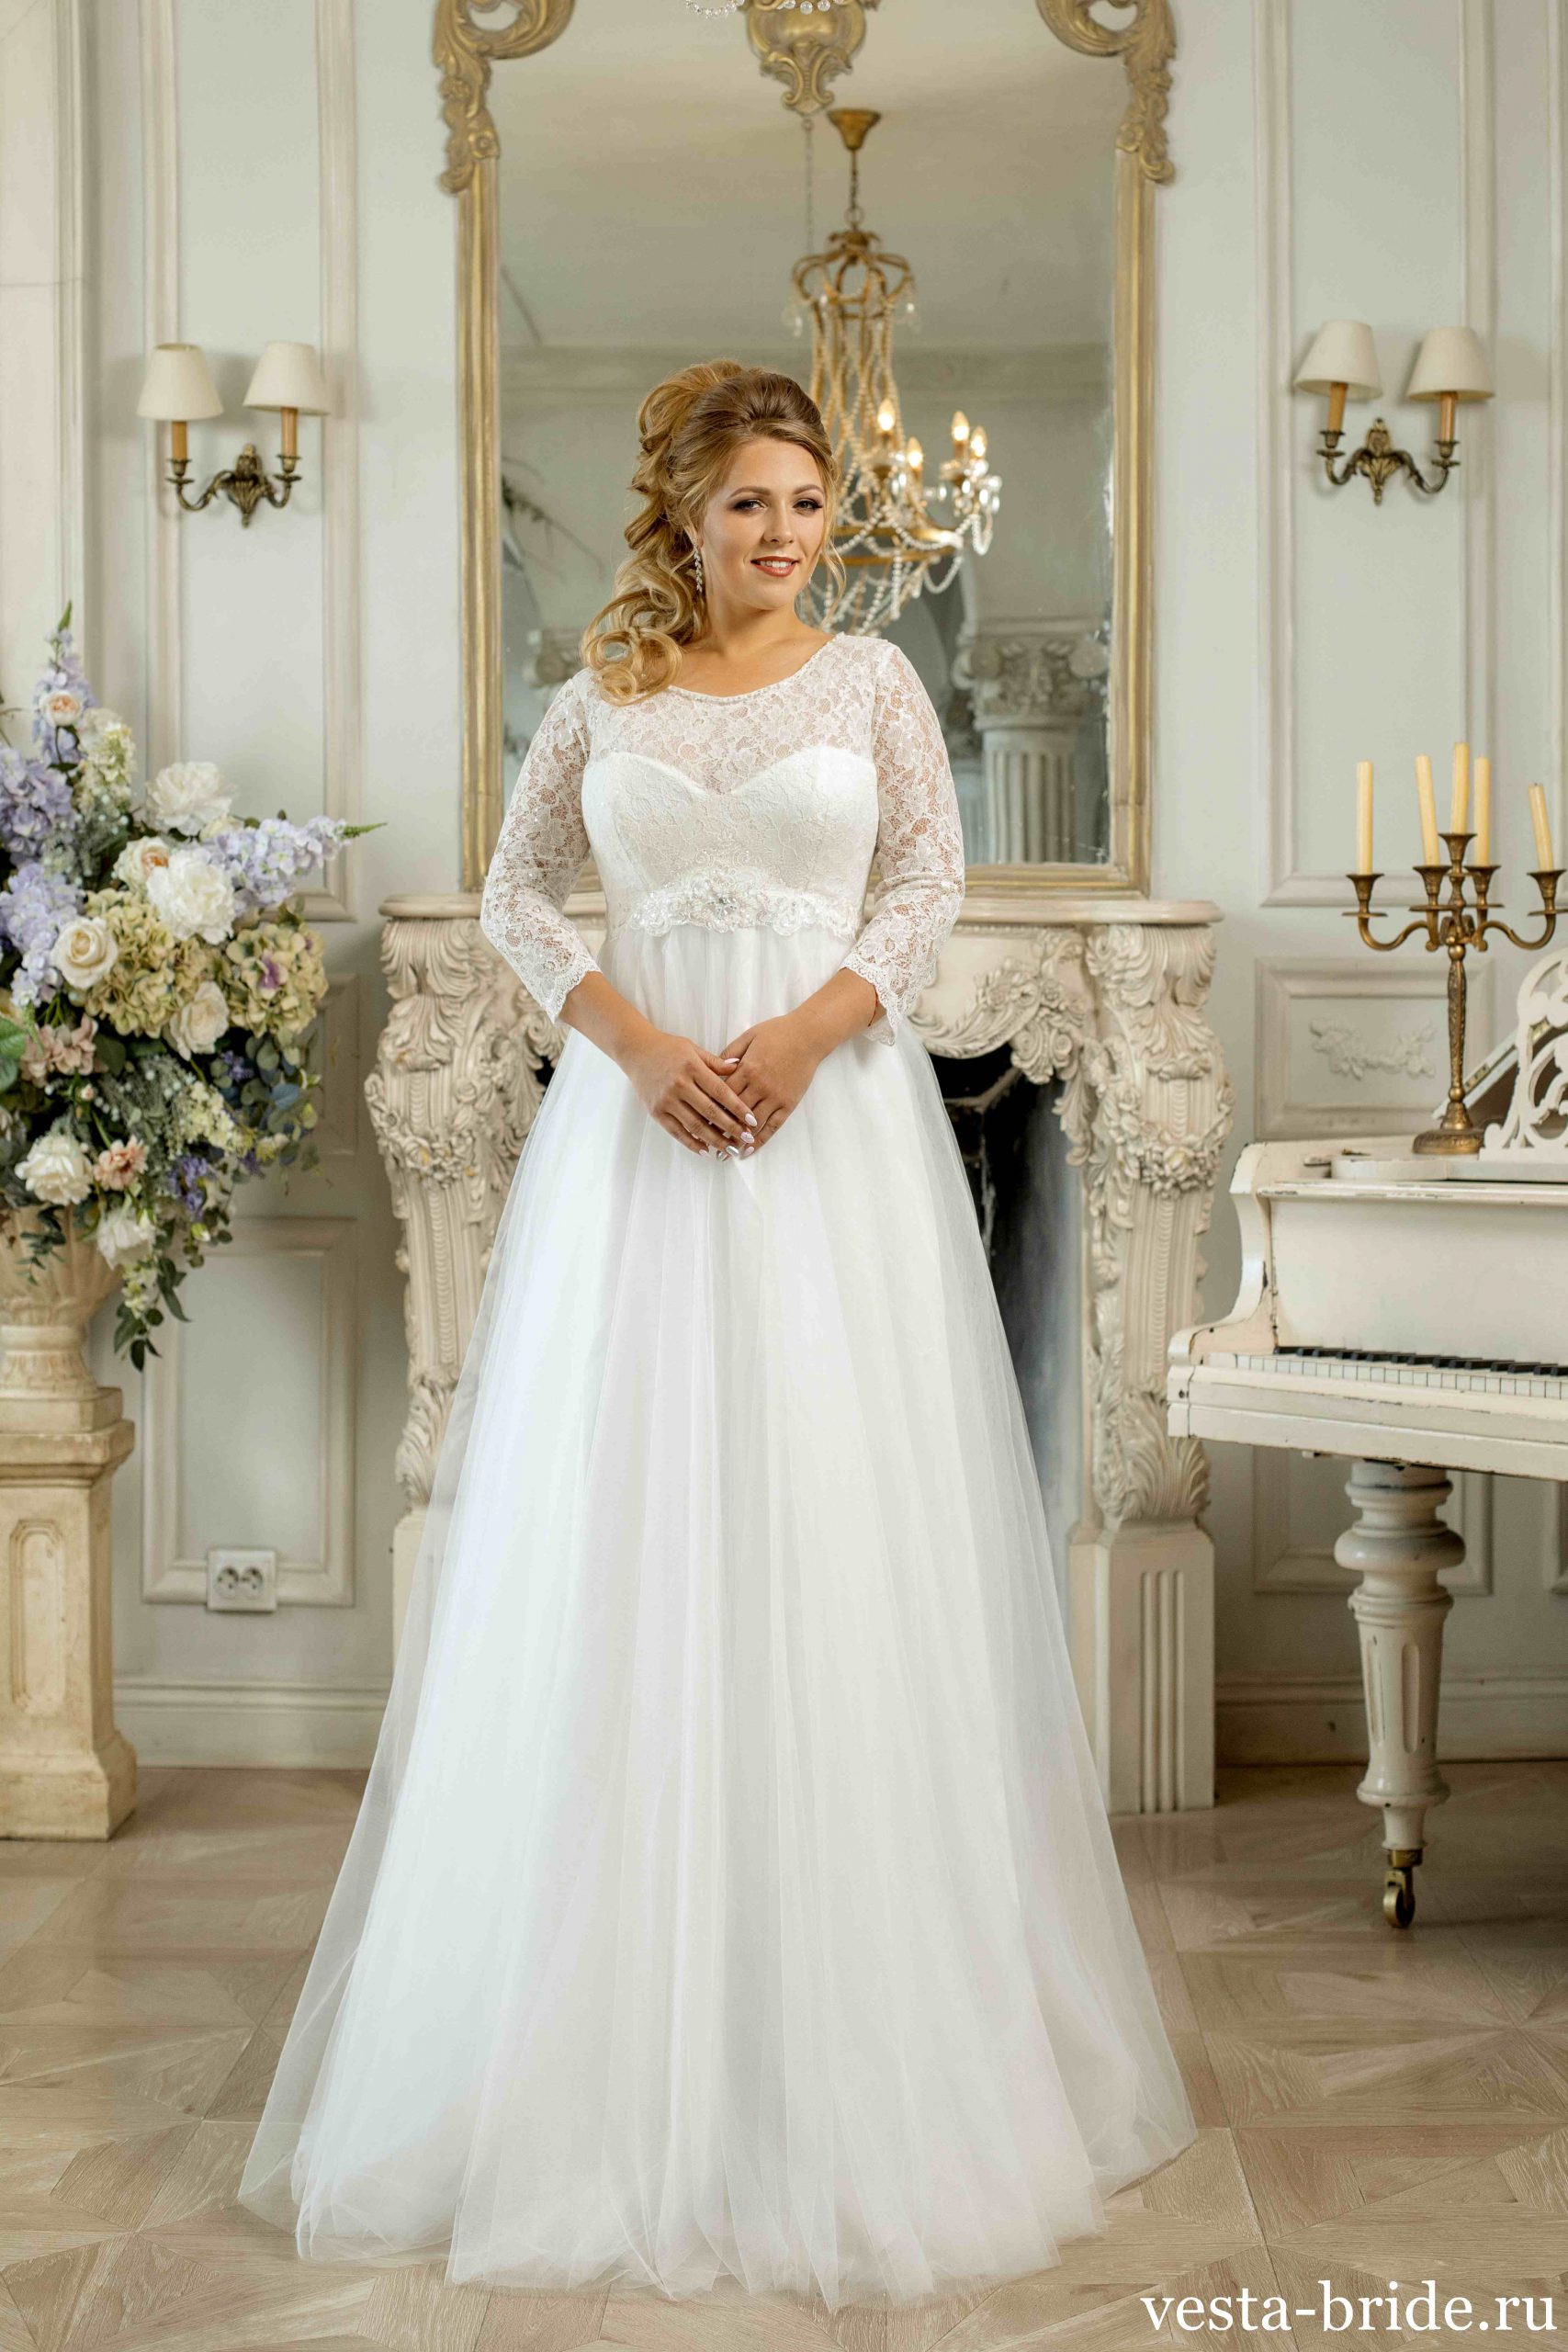 1i3sdvbo46mde3url5wvy0x55 scaled Закрытое свадебное платье Ампир (в греческом стиле) Melinda